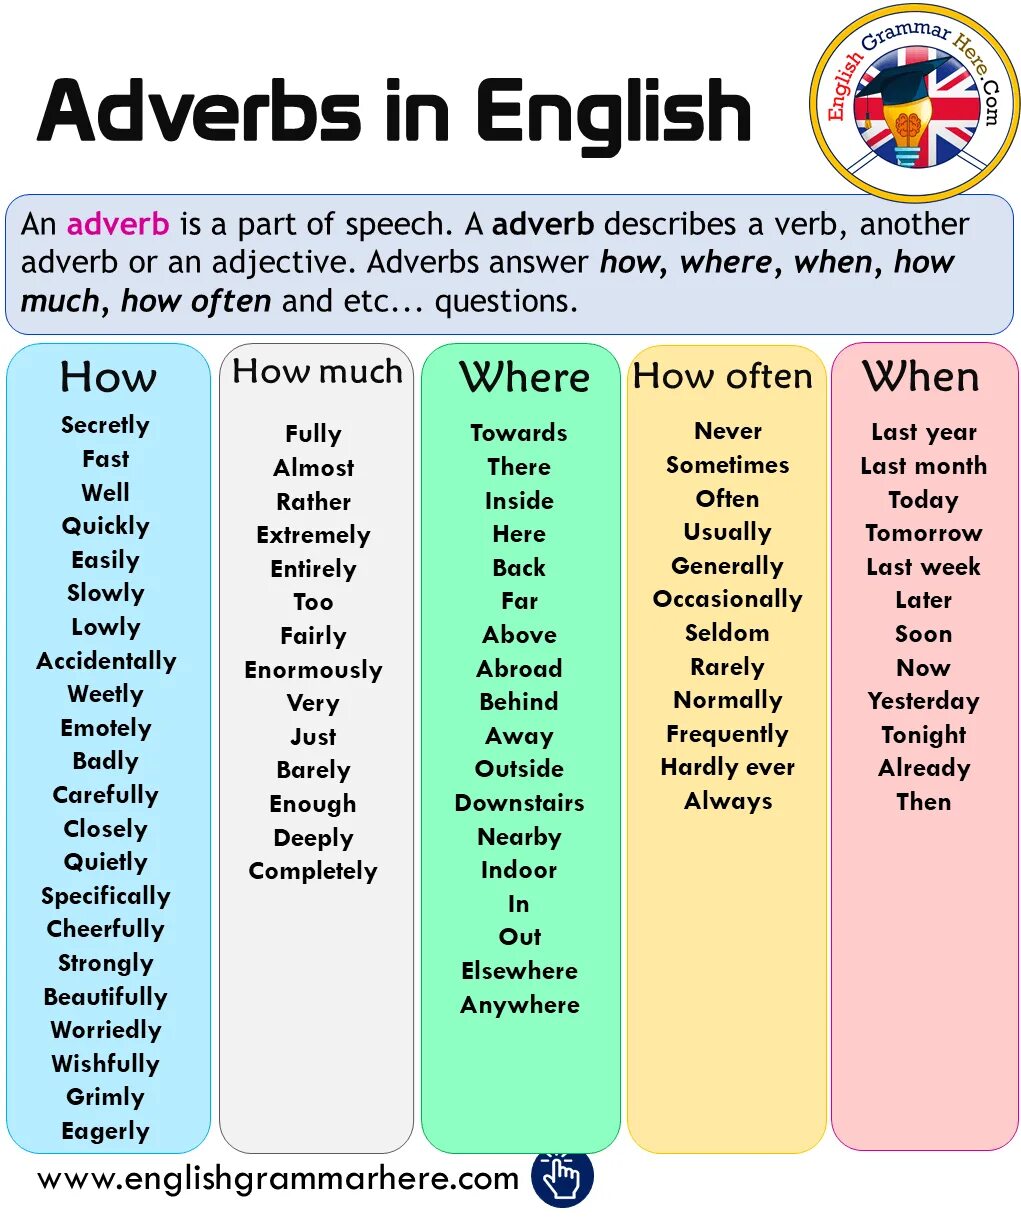 Adverbs careful. Adverbs. English adverbs. Adverbs in English. Наречия в английском языке.